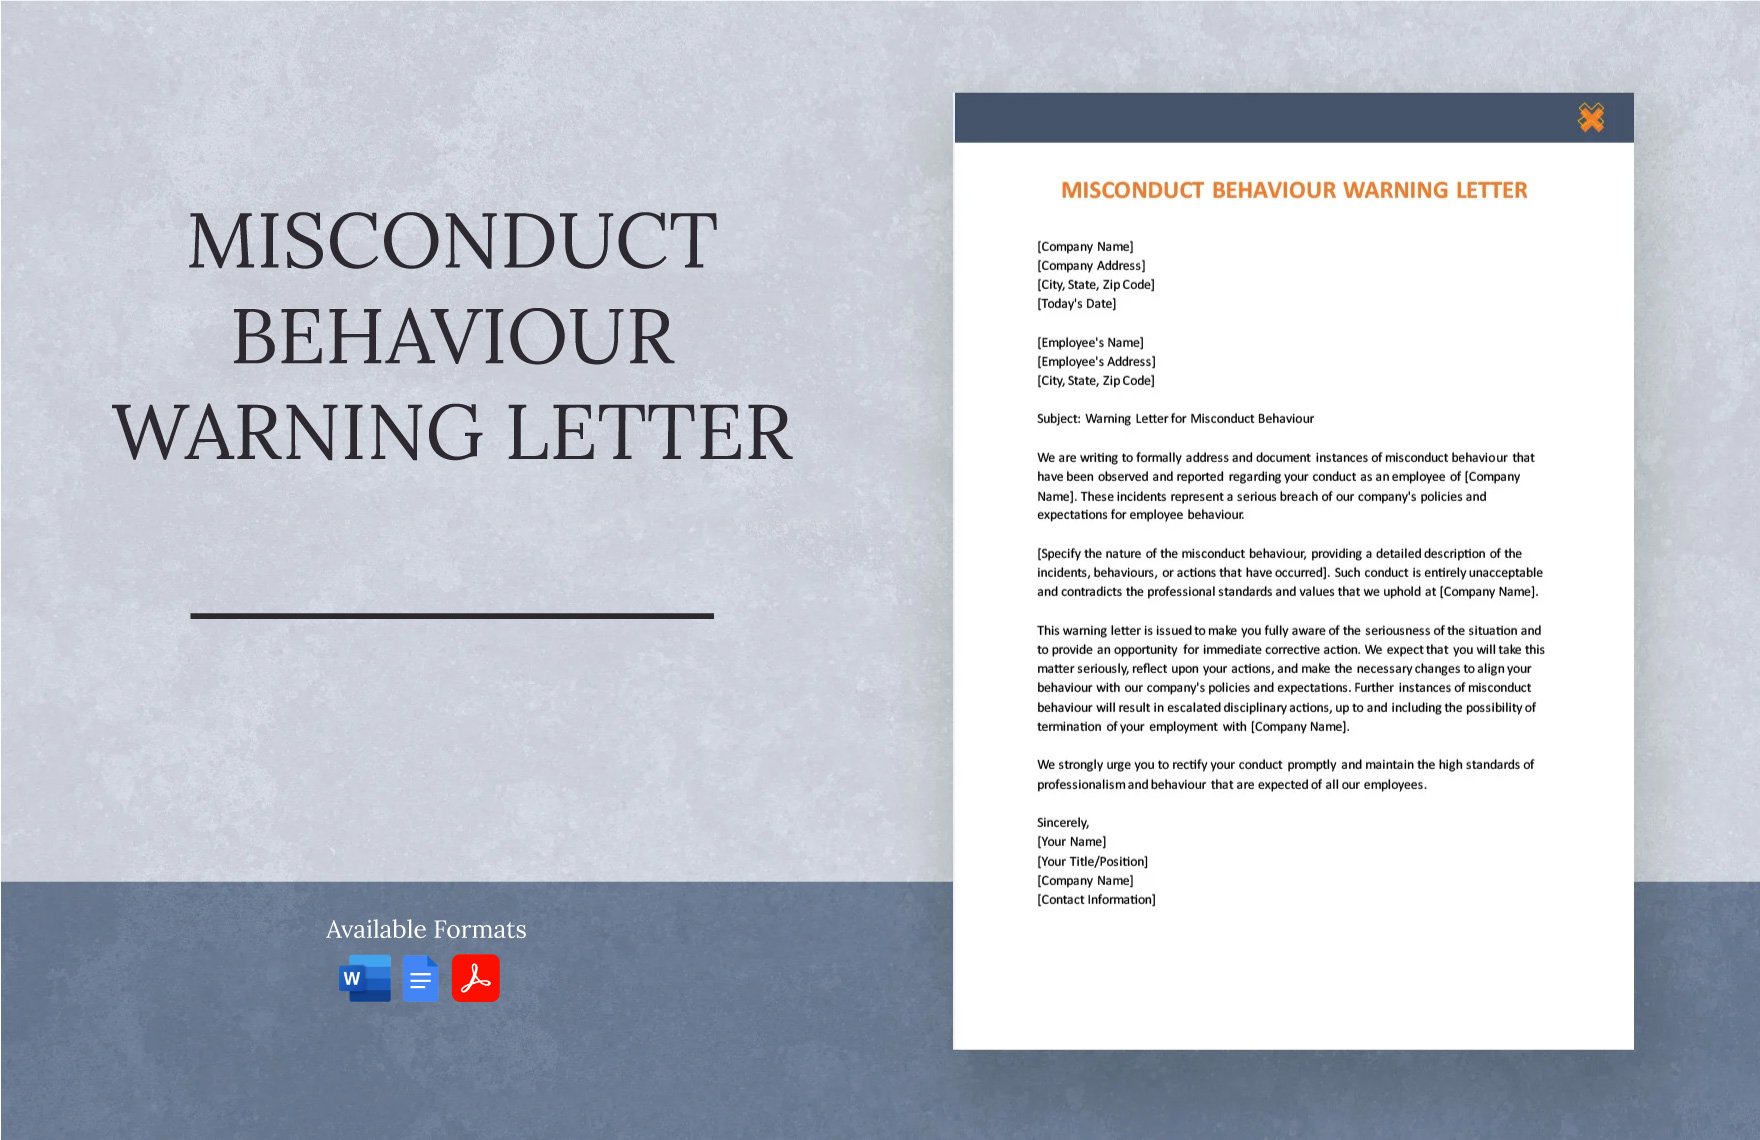 Misconduct Behavior Warning Letter in Word, Google Docs, PDF